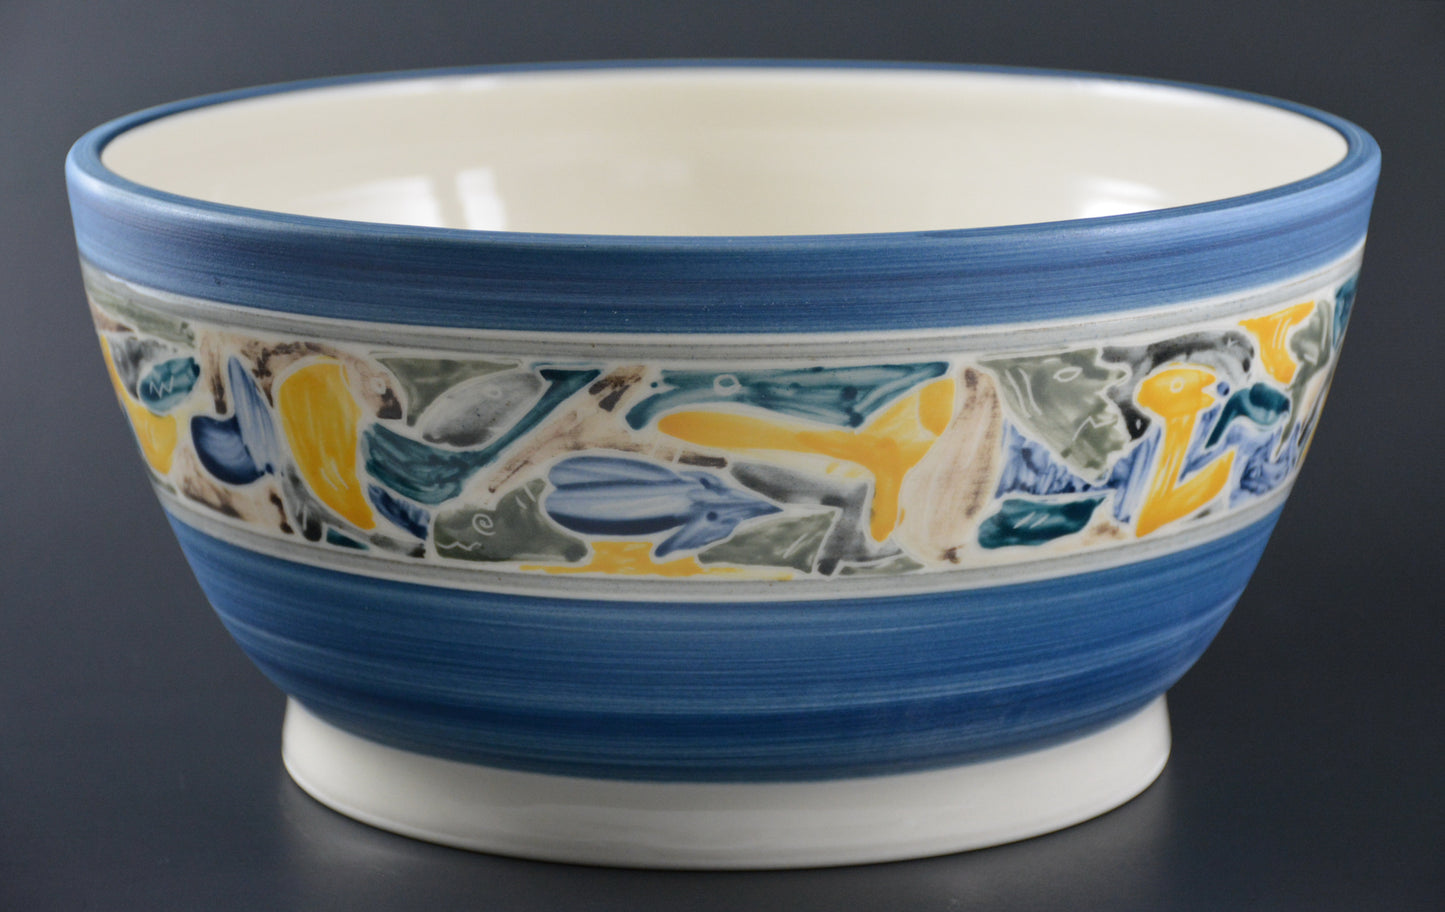 BL-26 Ceramic Blue Bowl - Porcelain Blue Bowl